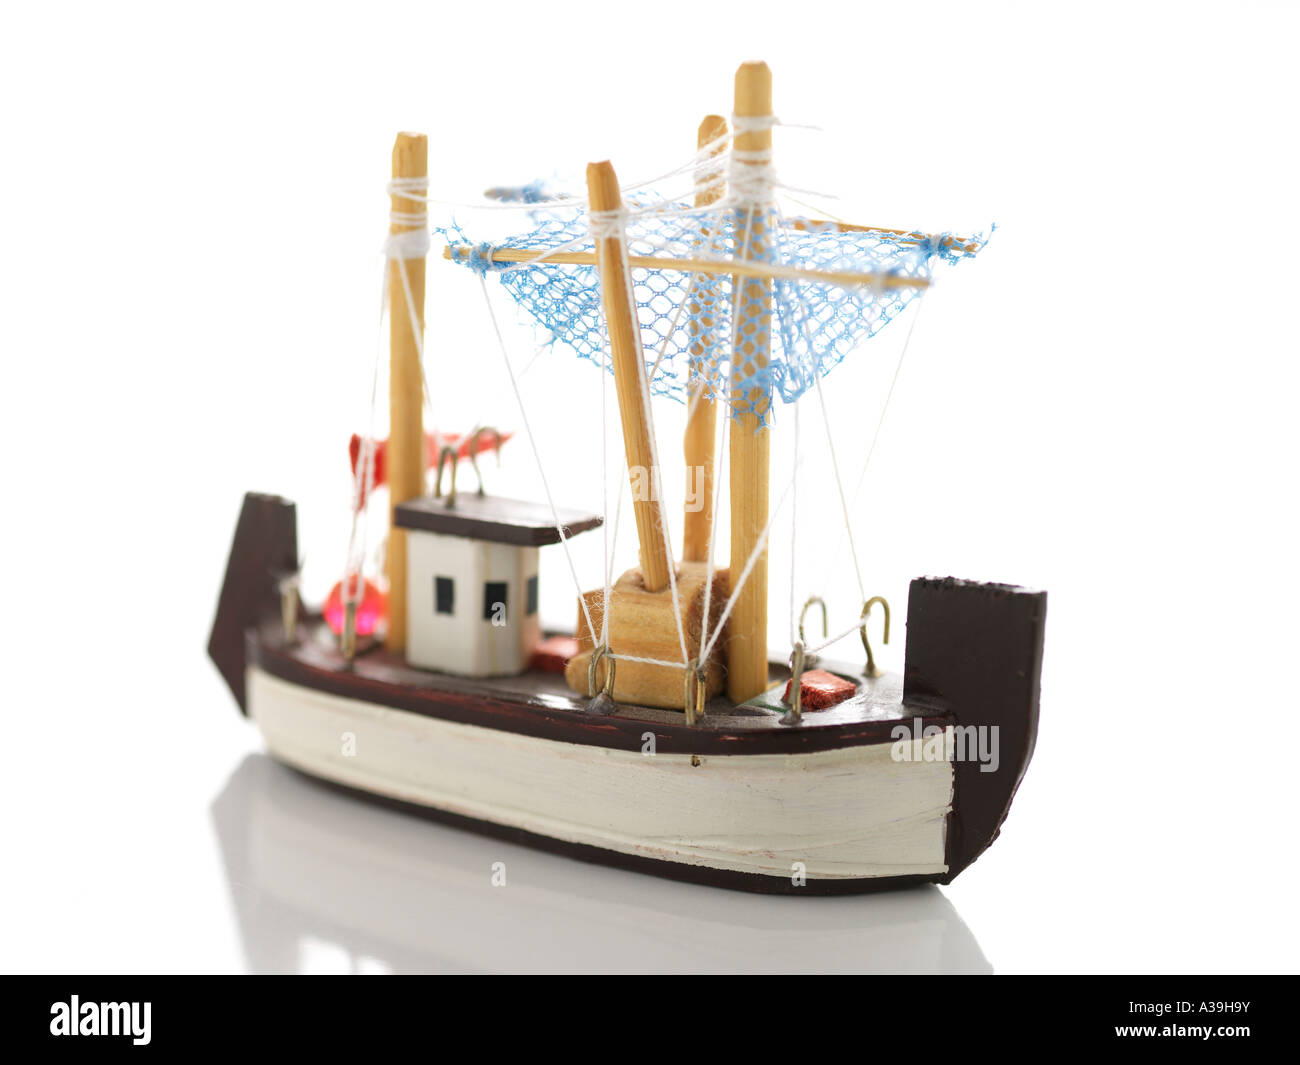 https://c8.alamy.com/comp/A39H9Y/model-ship-ornament-wood-handicraft-souvenir-small-toy-detailed-miniature-A39H9Y.jpg